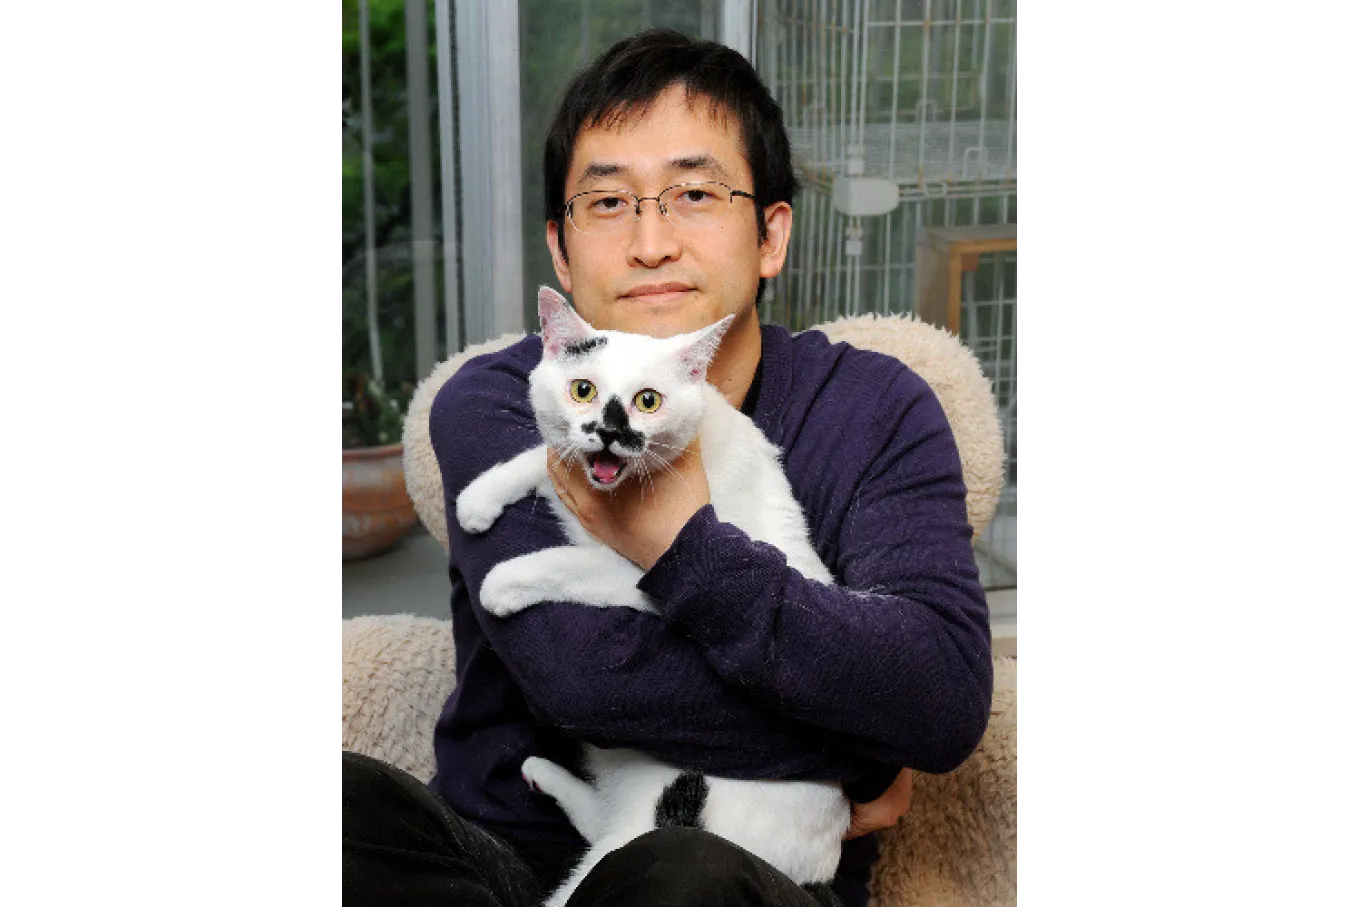 Horror manga artist Junji Ito posing with his cat.